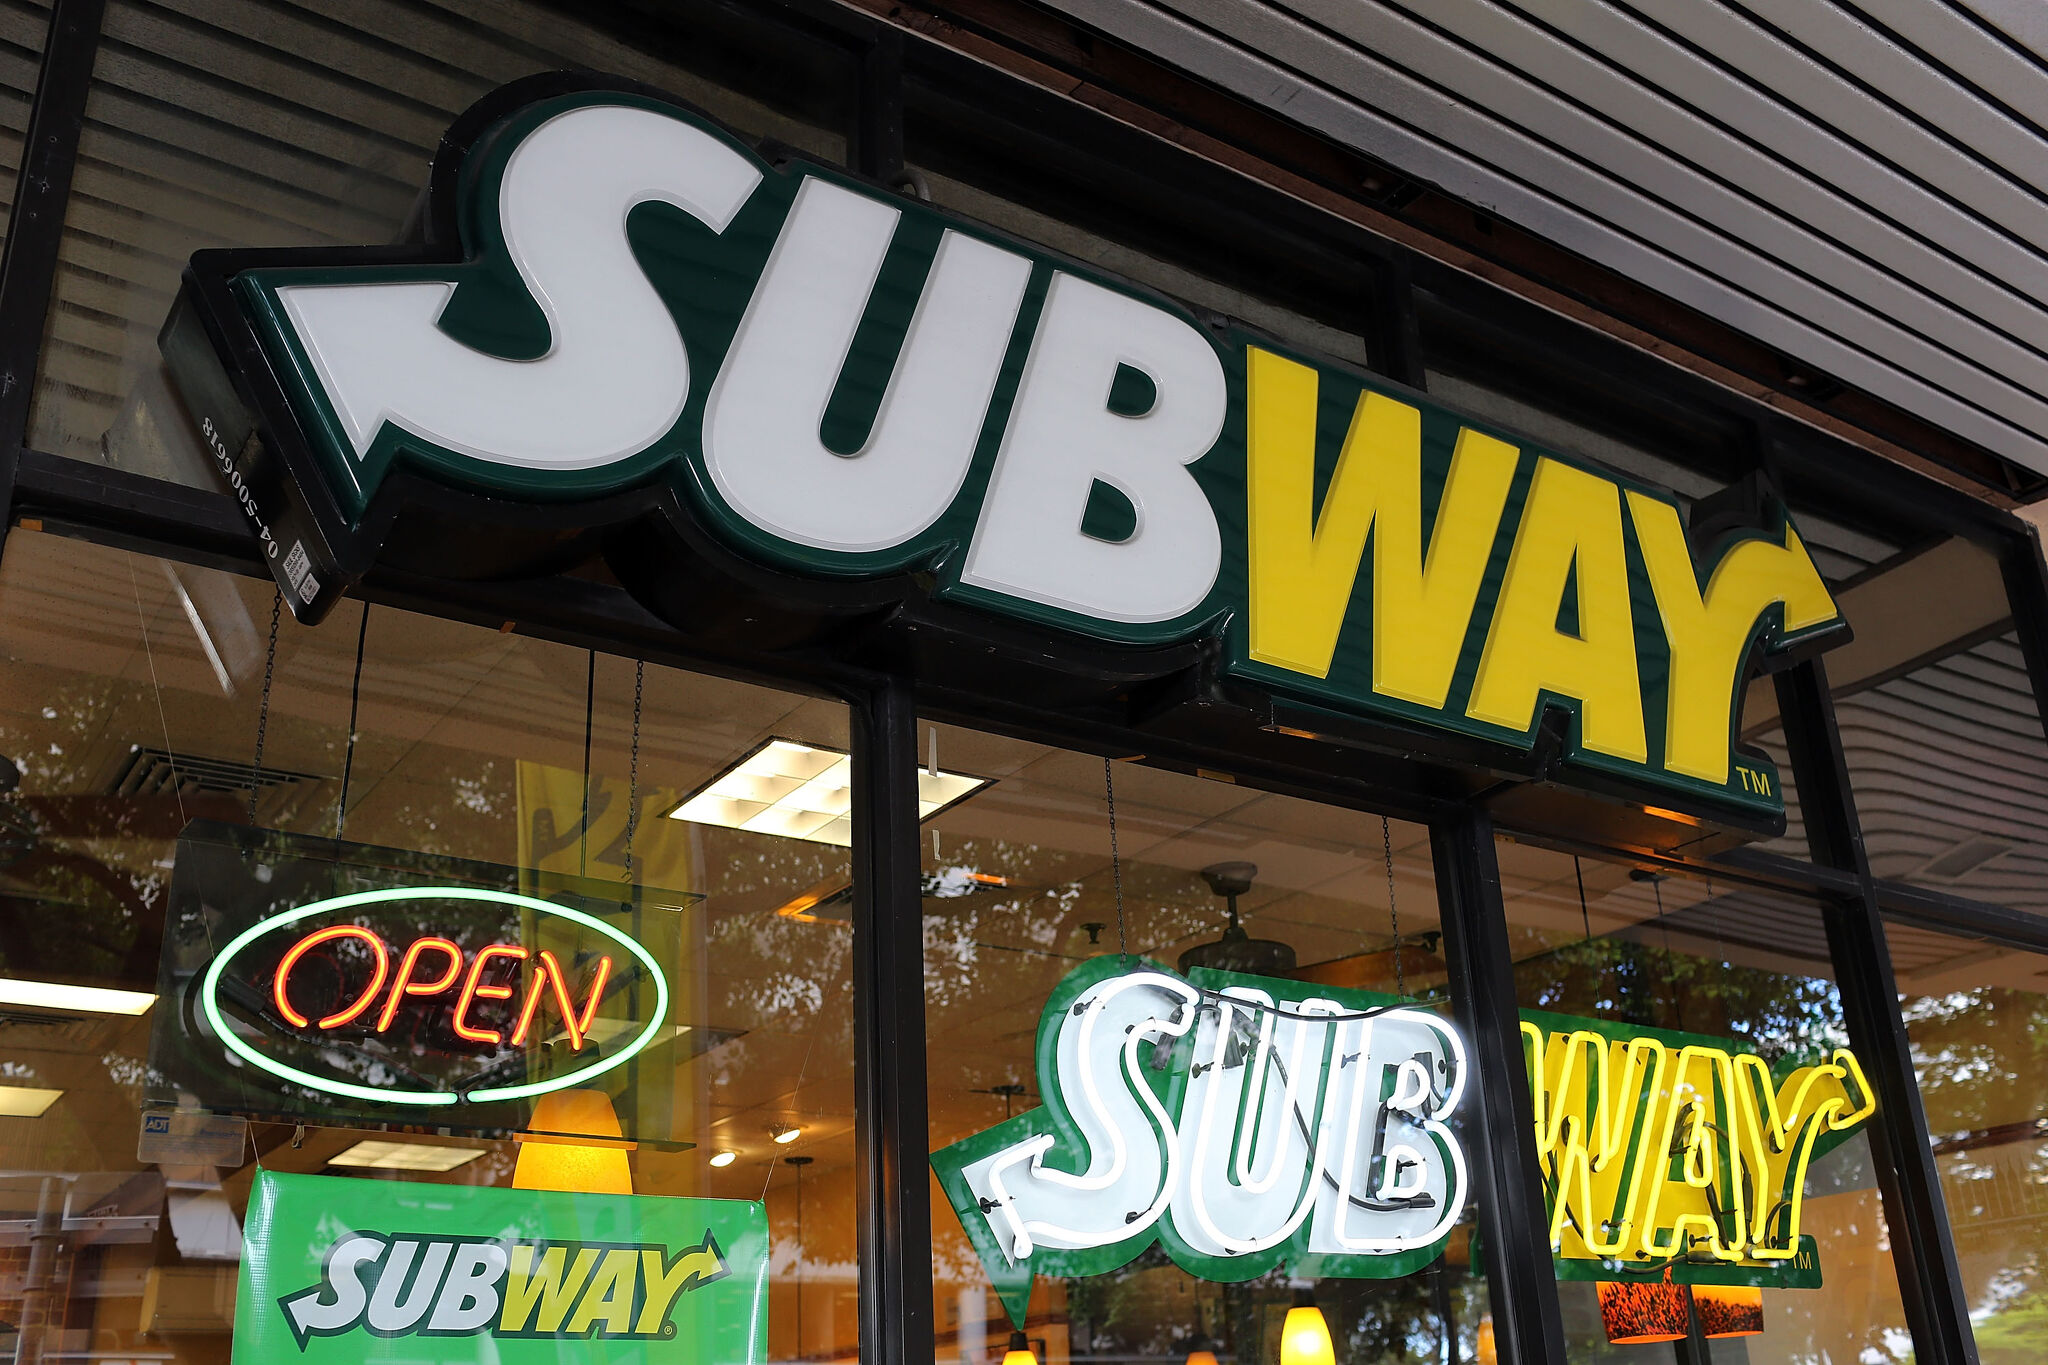 The Real Reason You Might Want To Skip Subway's New Turkey Cali Fresh Sub